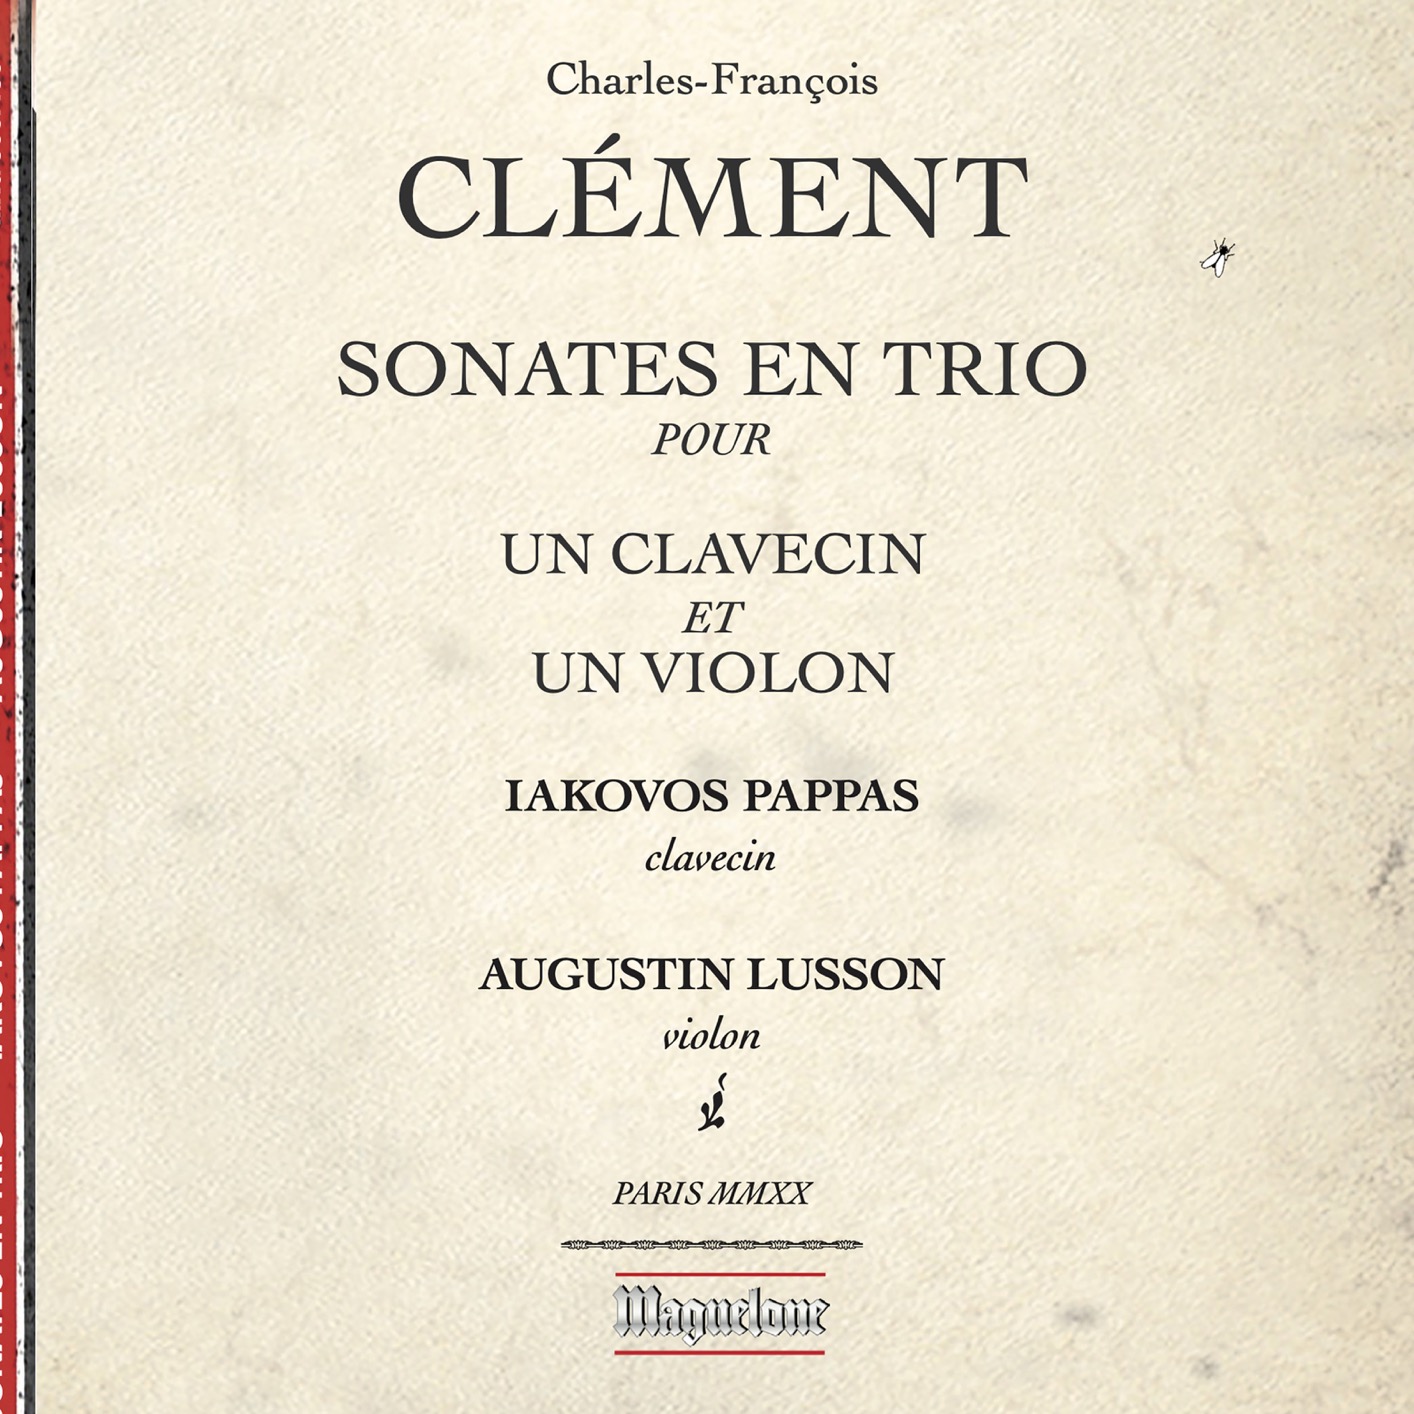 Clement - Sonatas for Violin & Harpsichord, 1743 - Iakovos Pappas & Augustin Lusson